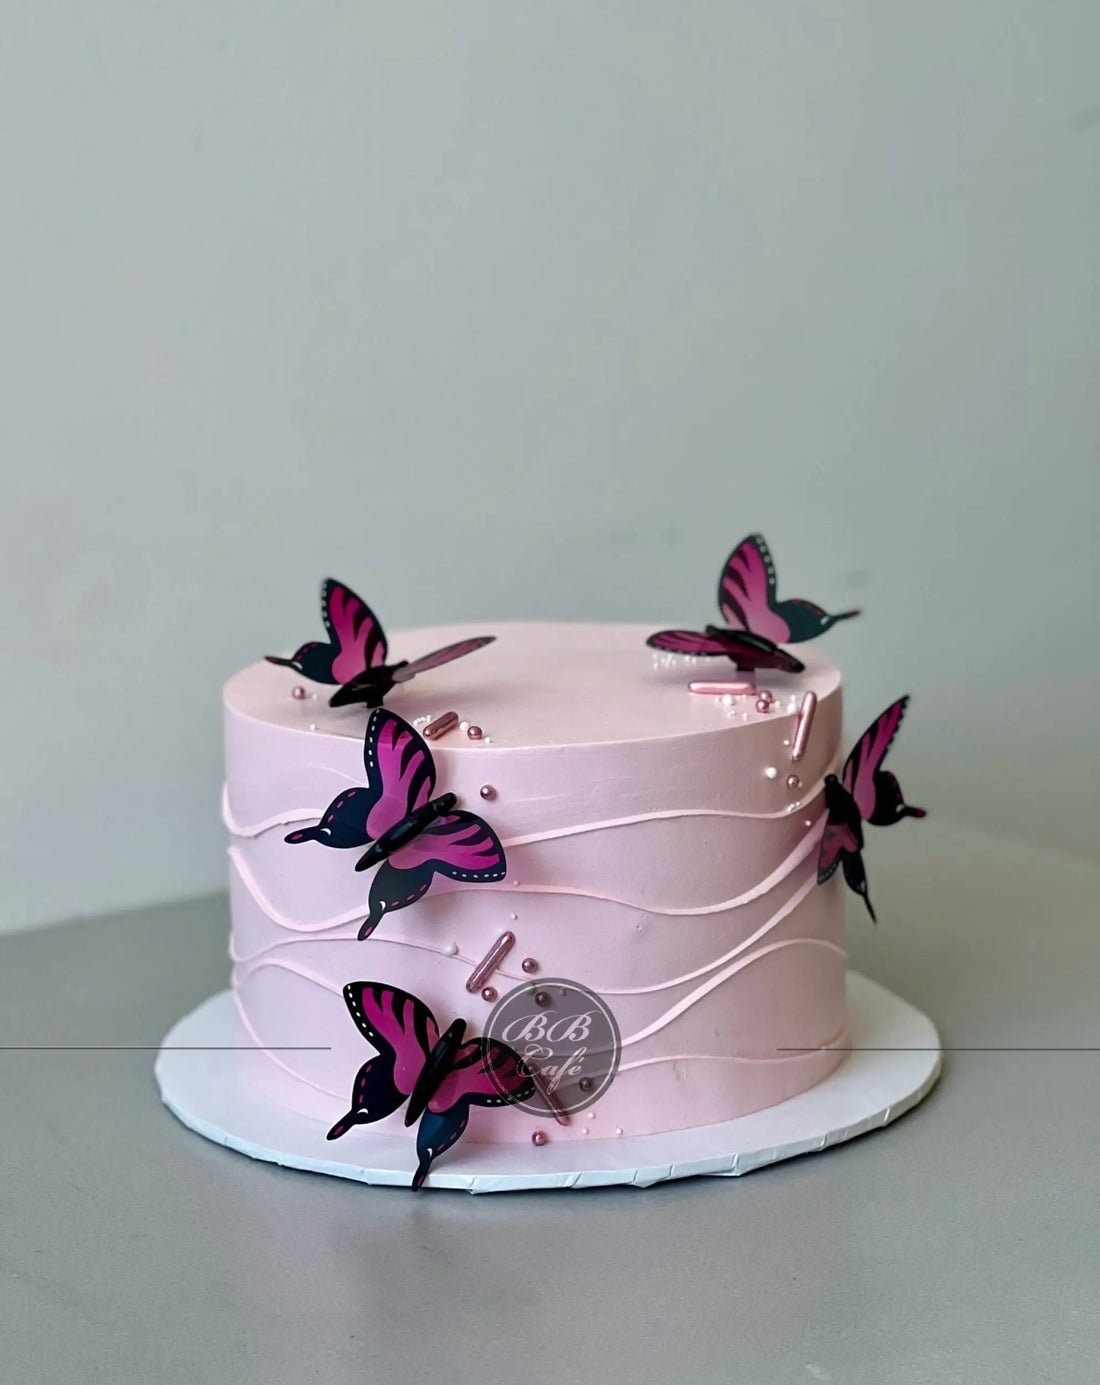 Butterfly on whipped cream - custom cake